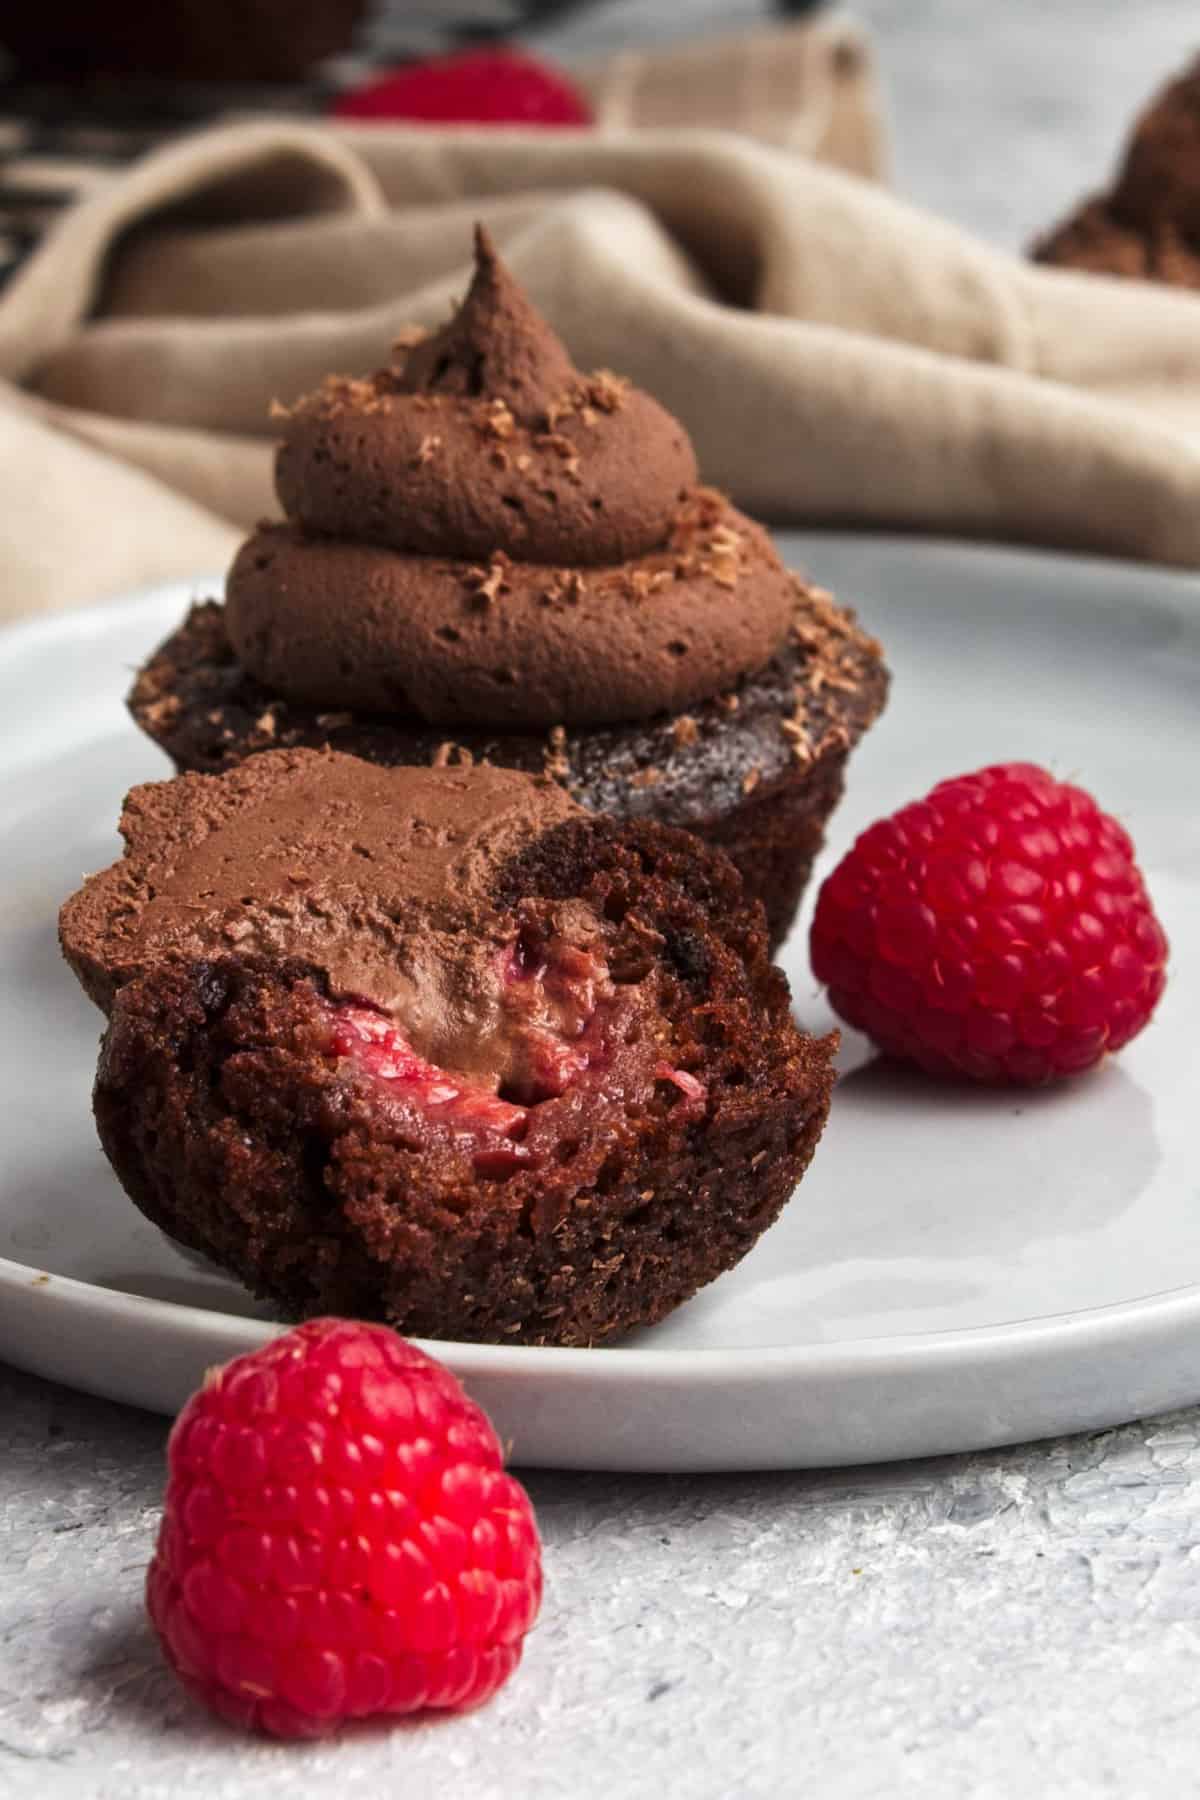 A cupcake cut in half revealing a juicy raspberry inside.